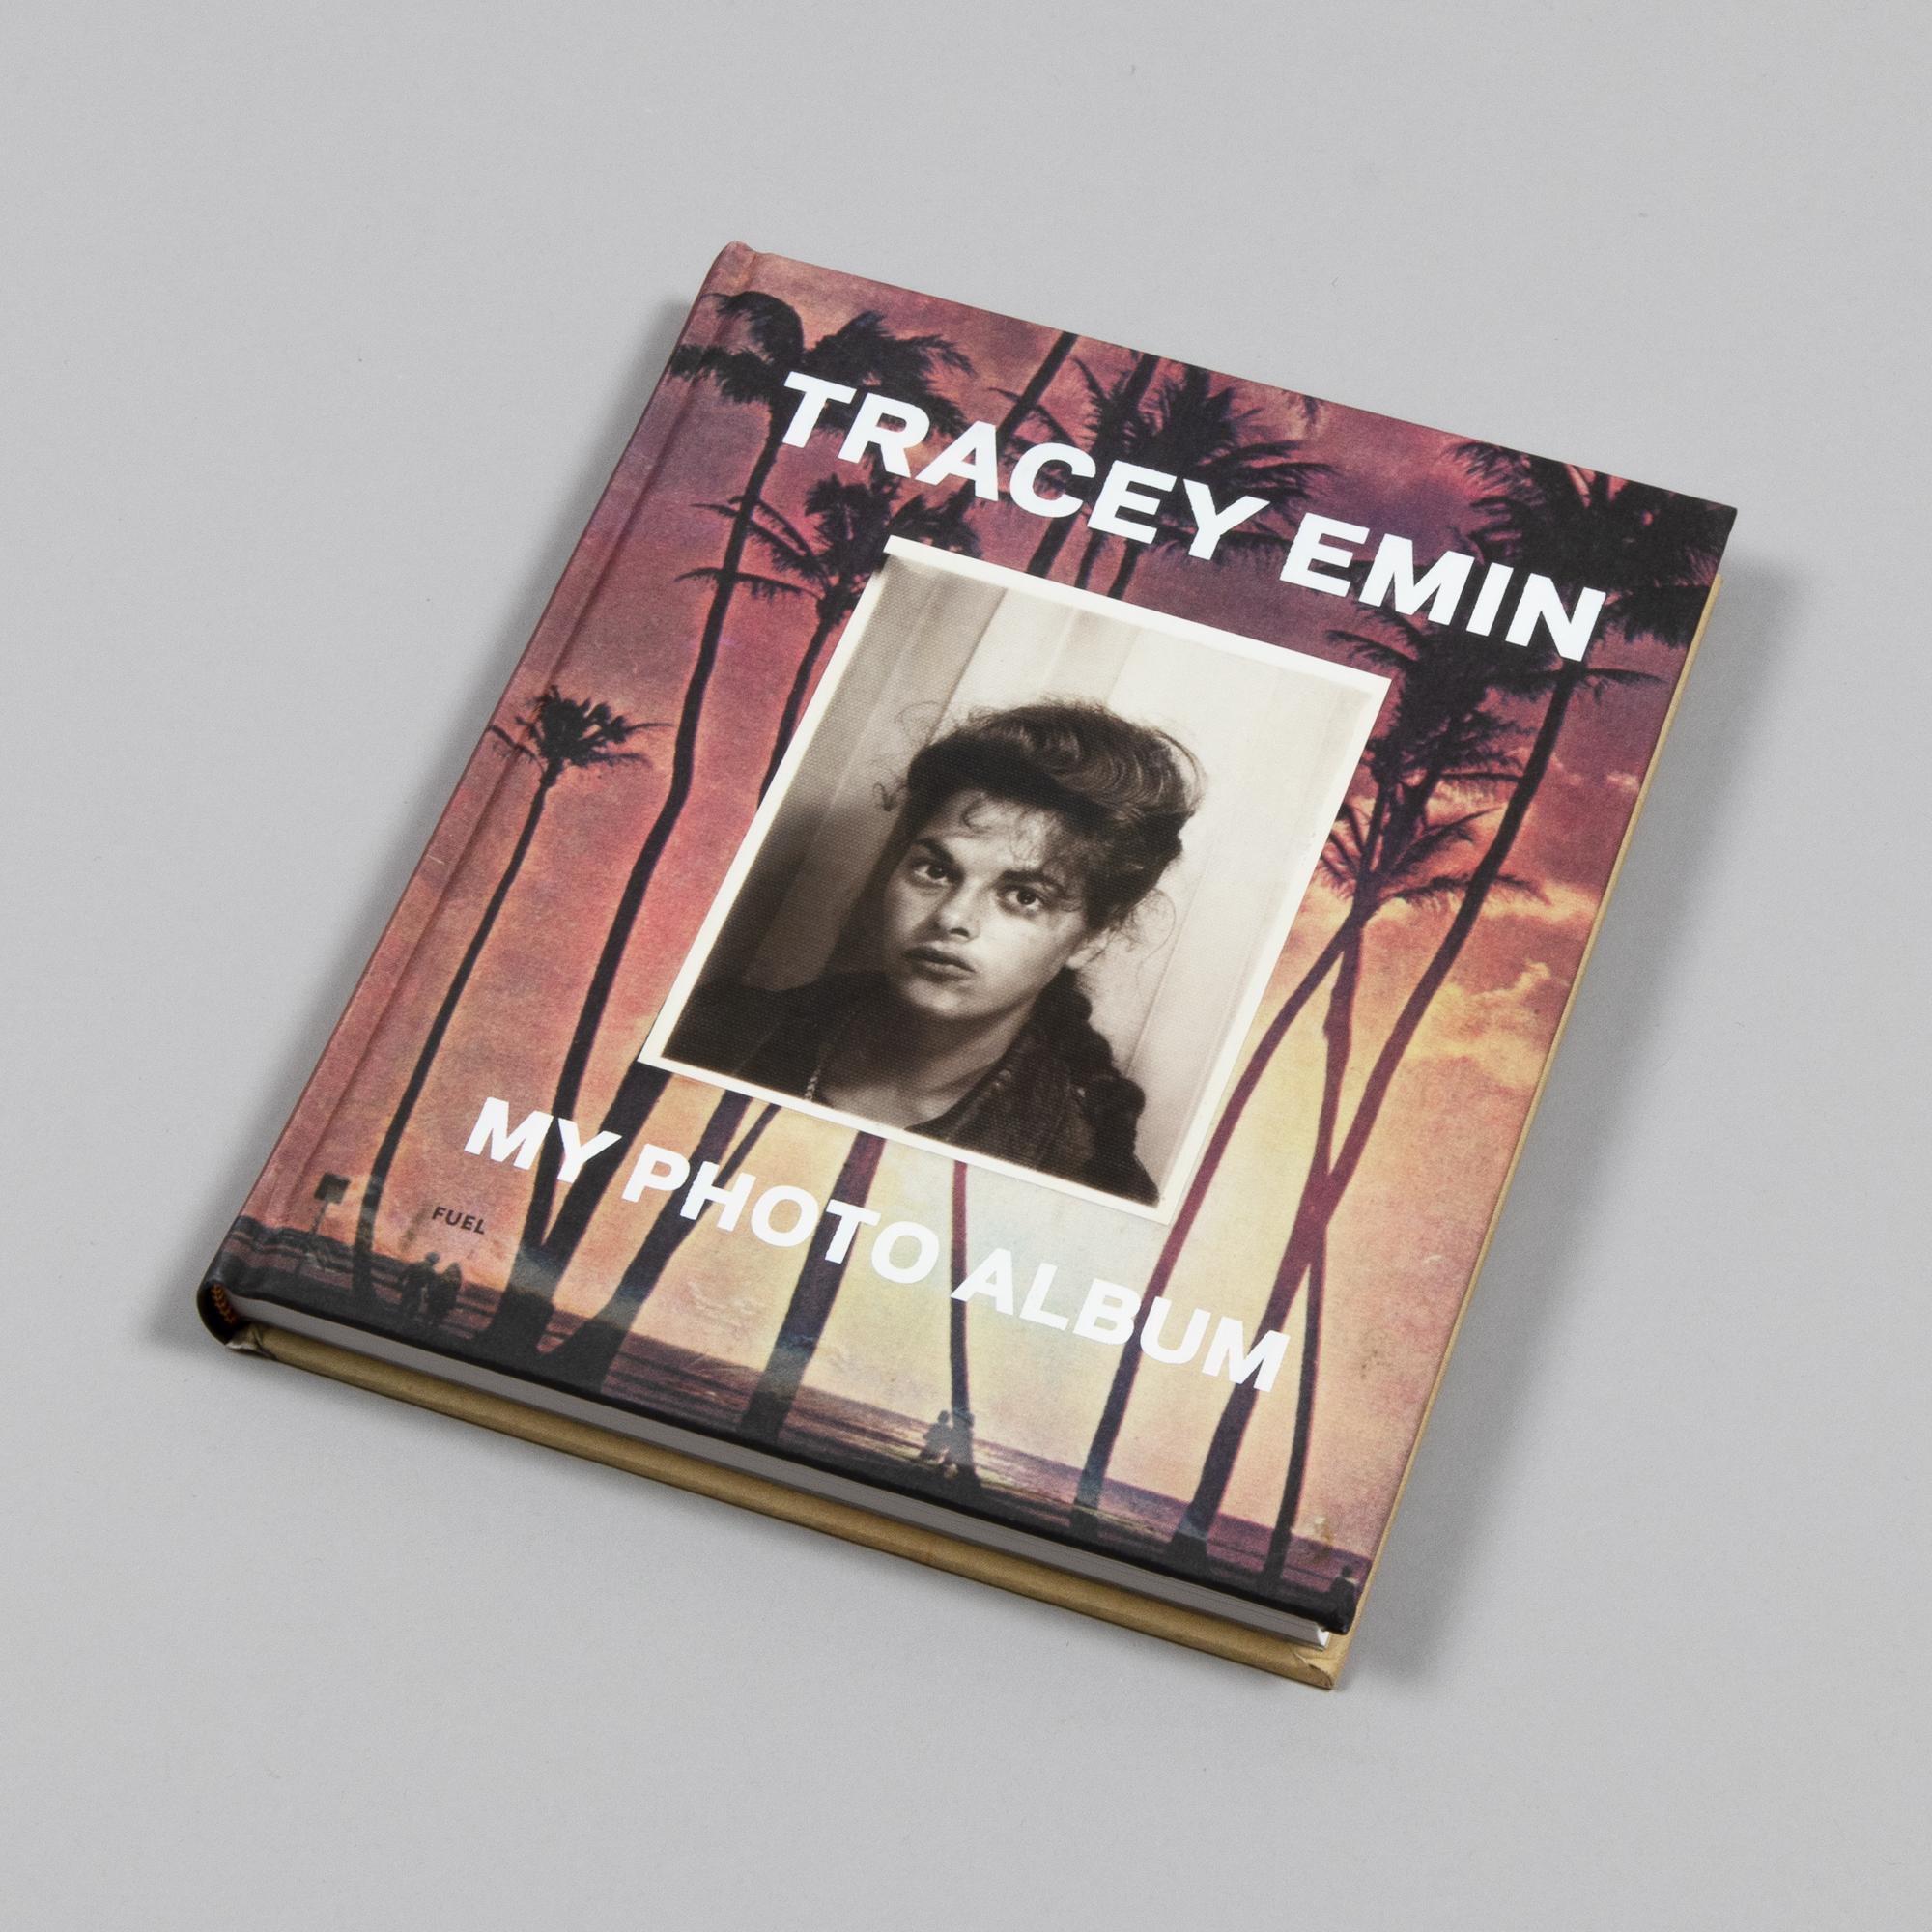 Tracey Emin (born 1963 in Croydon)
Sixteen, 2013
Medium: Giclée print on archival fine art paper housed in a black print box, accompanied by the book My Photo Album
Print dimensions: 25.4 x 20.3 cm (10 x 8 in)
Book dimensions: 18 x 22 cm (7.1 x 8.7